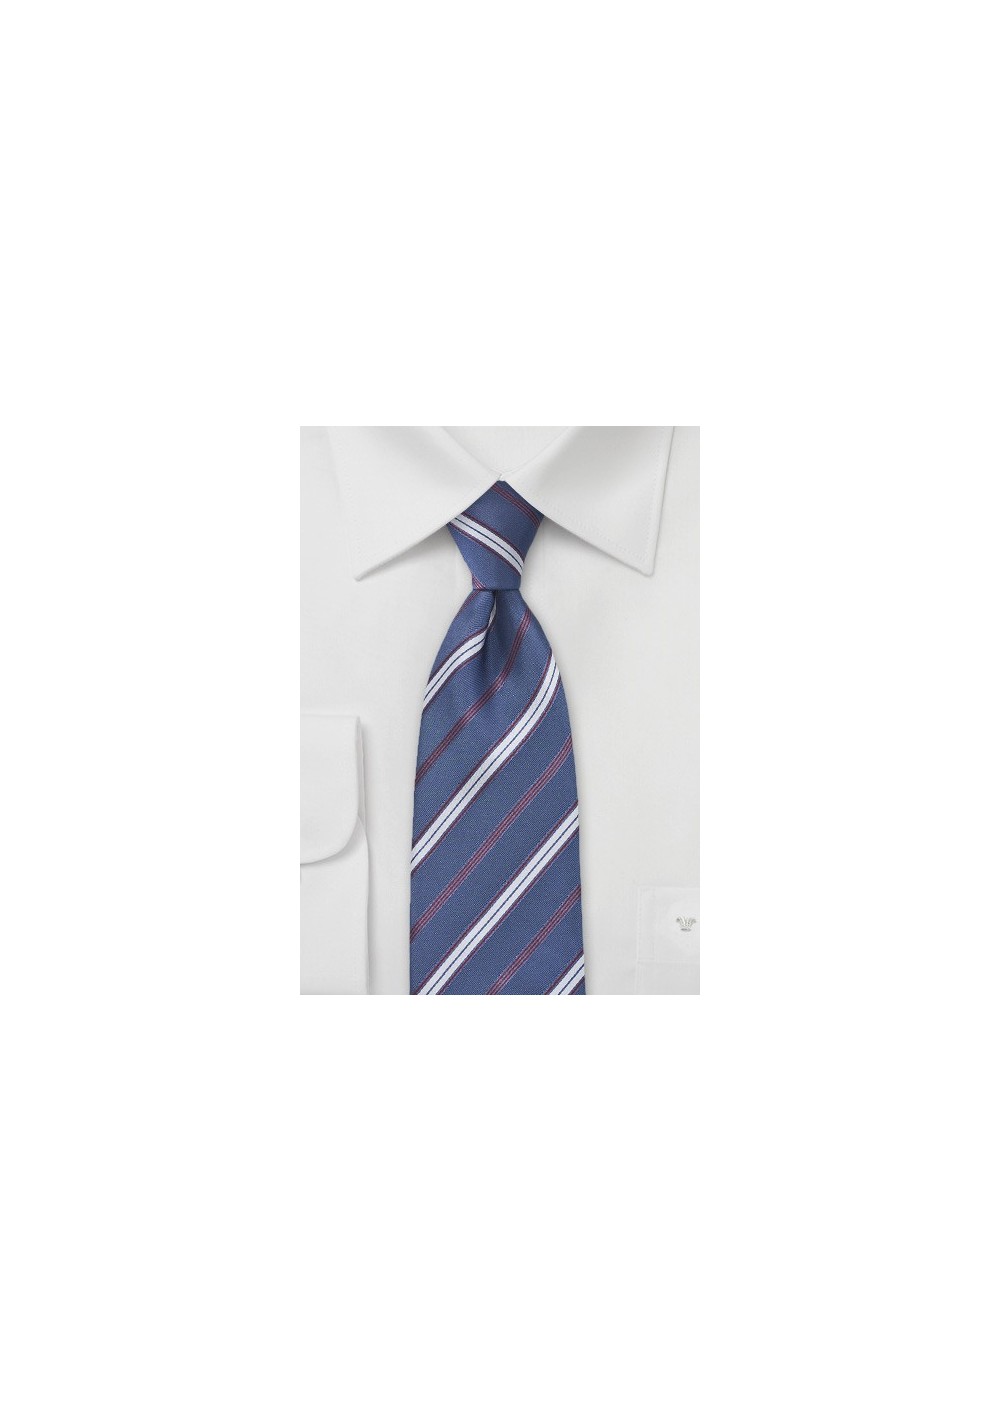 Cerulean Blue and Burgundy Striped Tie